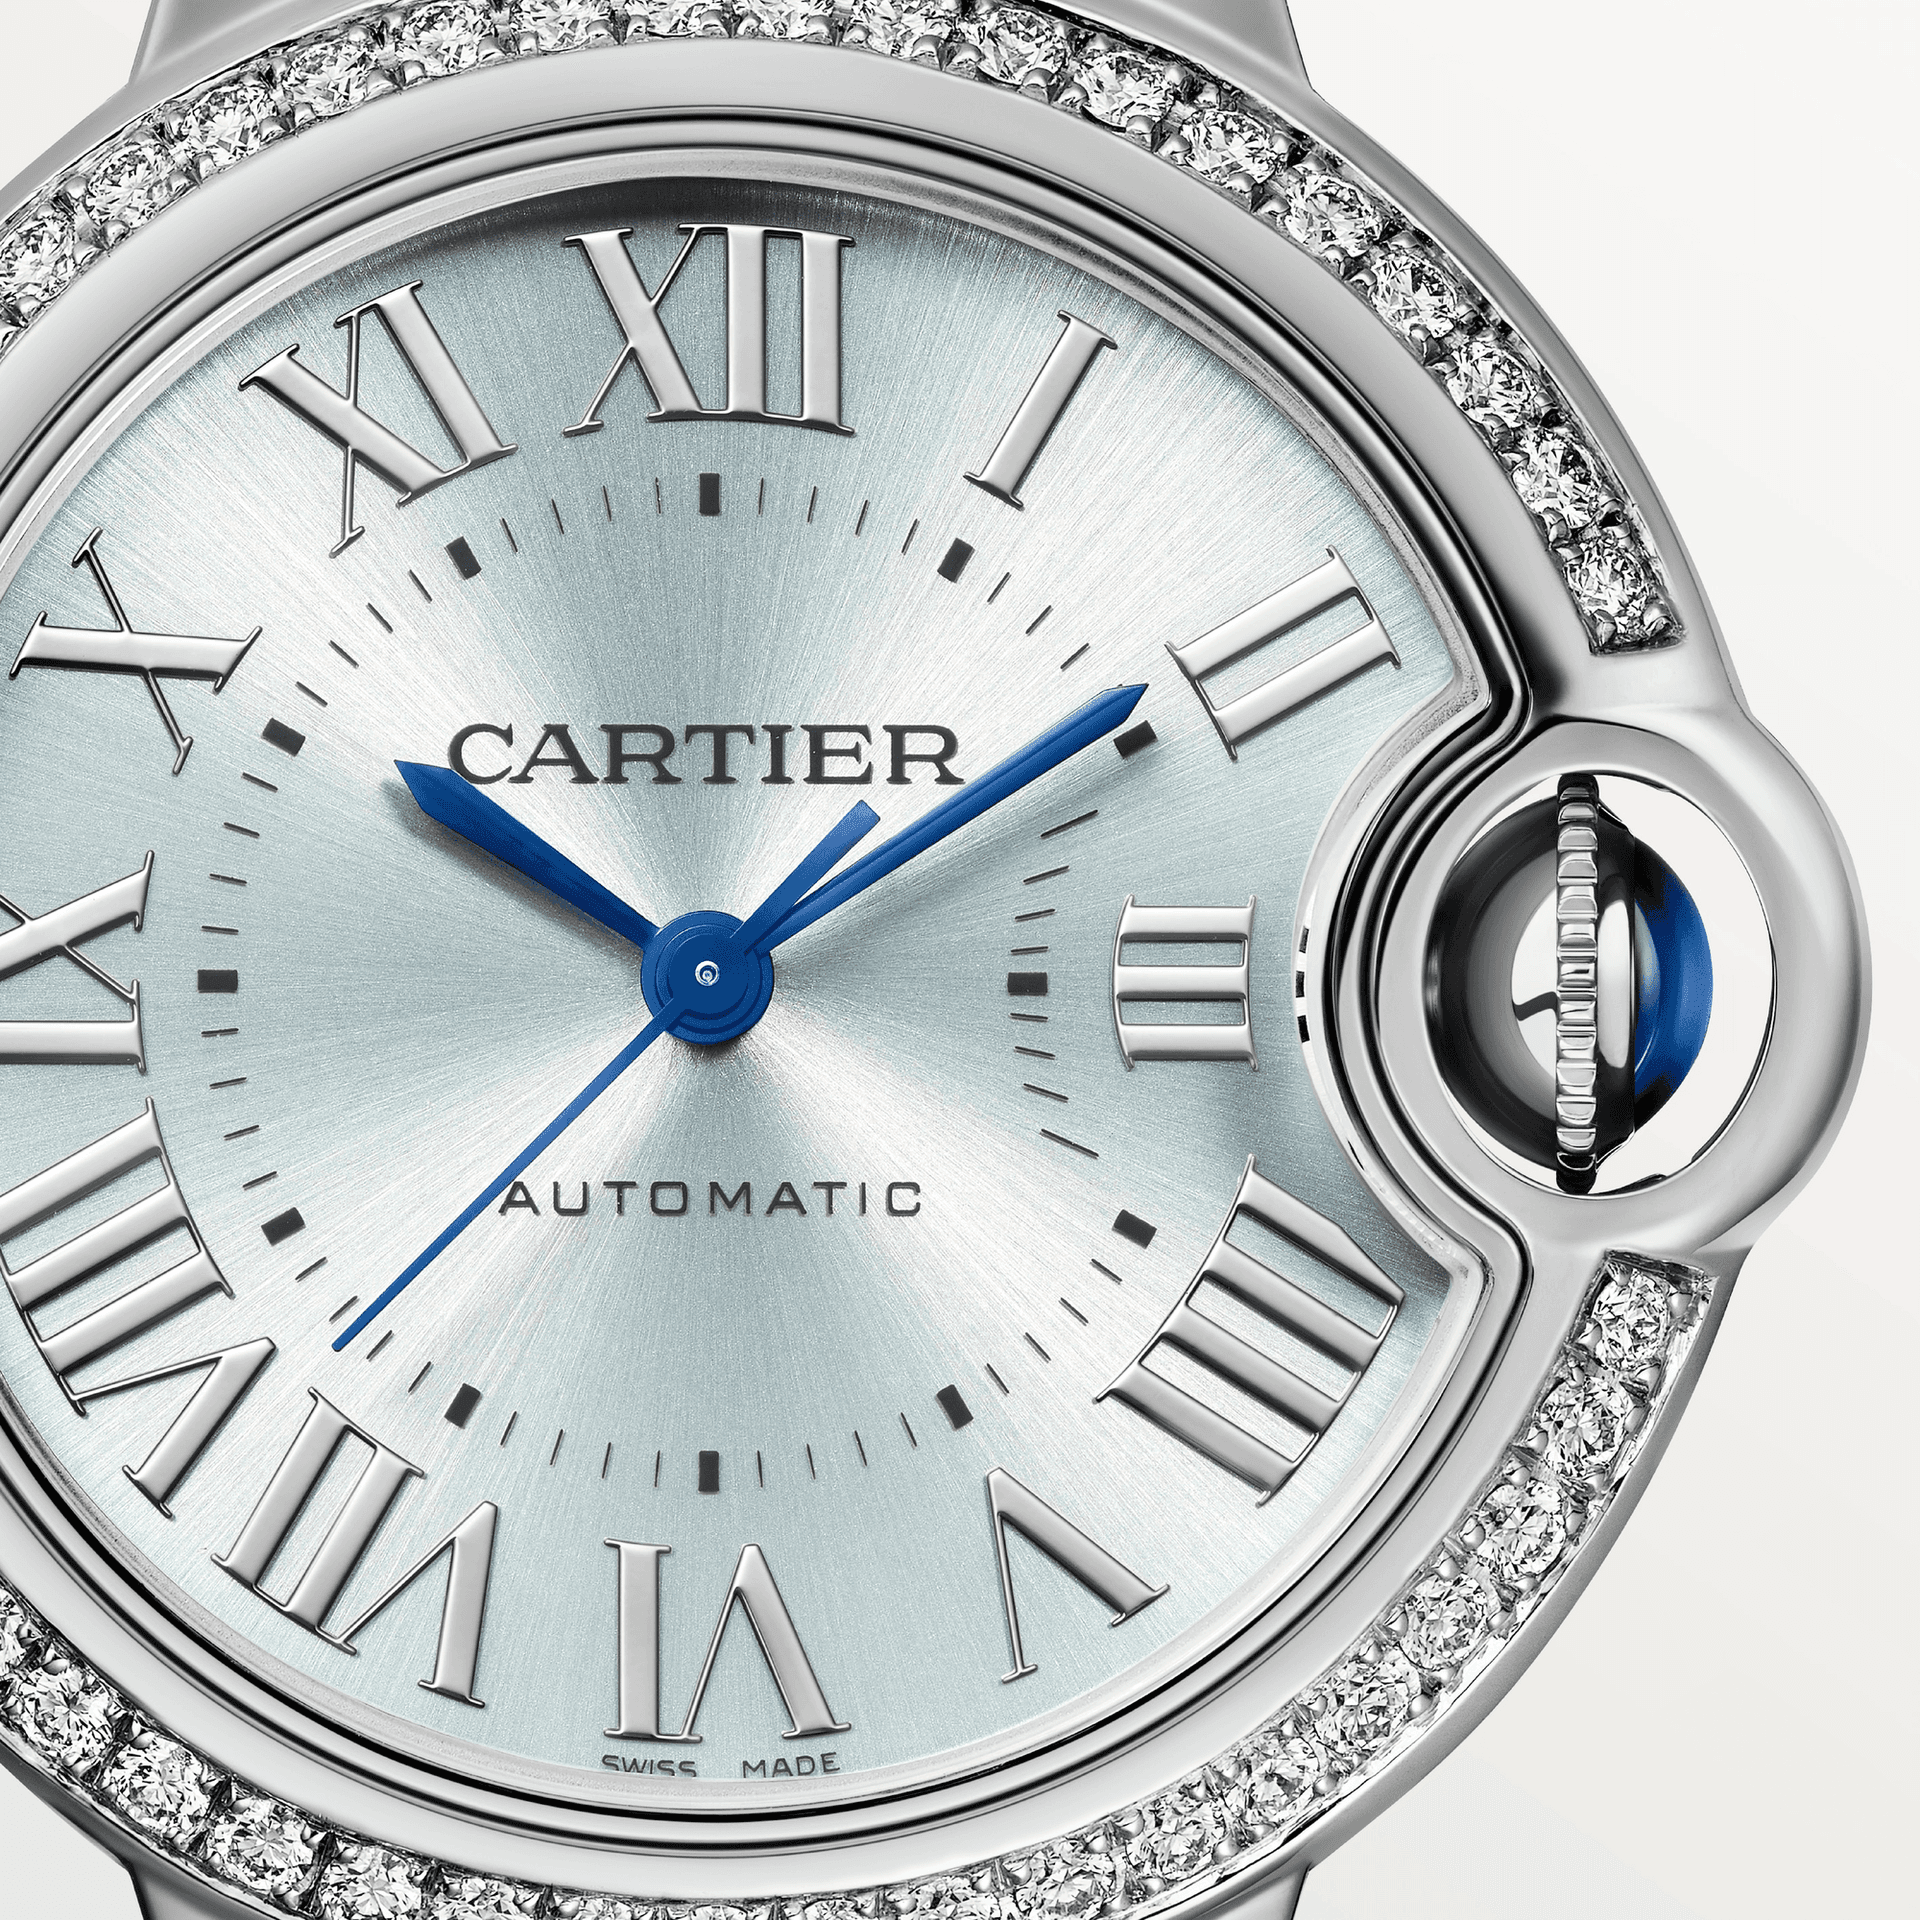 Ballon Bleu de Cartier Watch, Blue Silvered Sunray-Brushed Dial with Diamonds, 33mm
